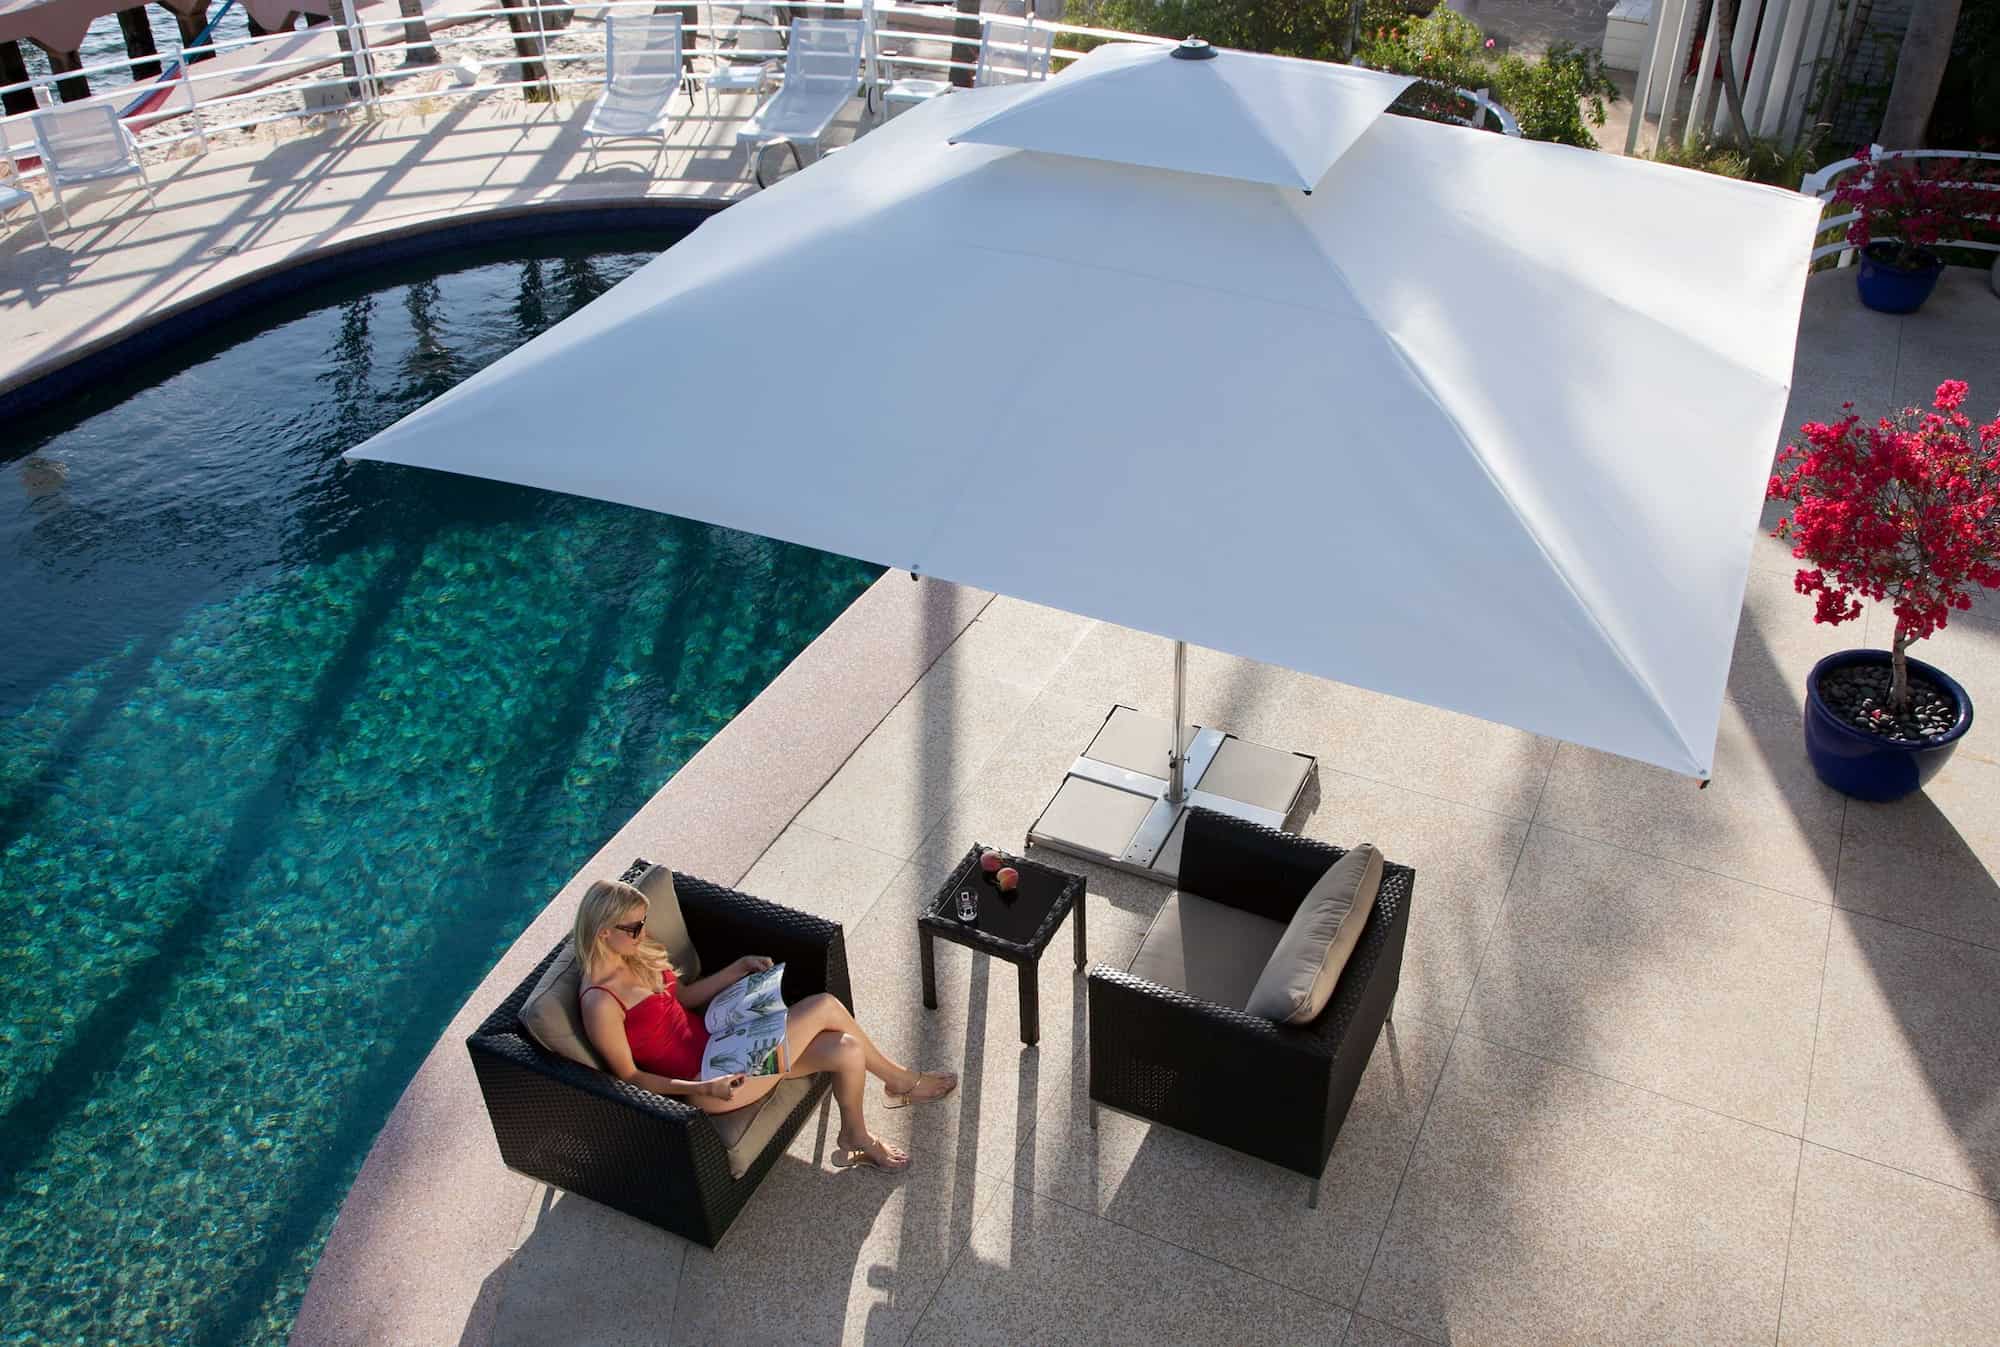 Frau sitzt unter dem Sonnenschirm-Modell "Supremo" an Swimmingpool.